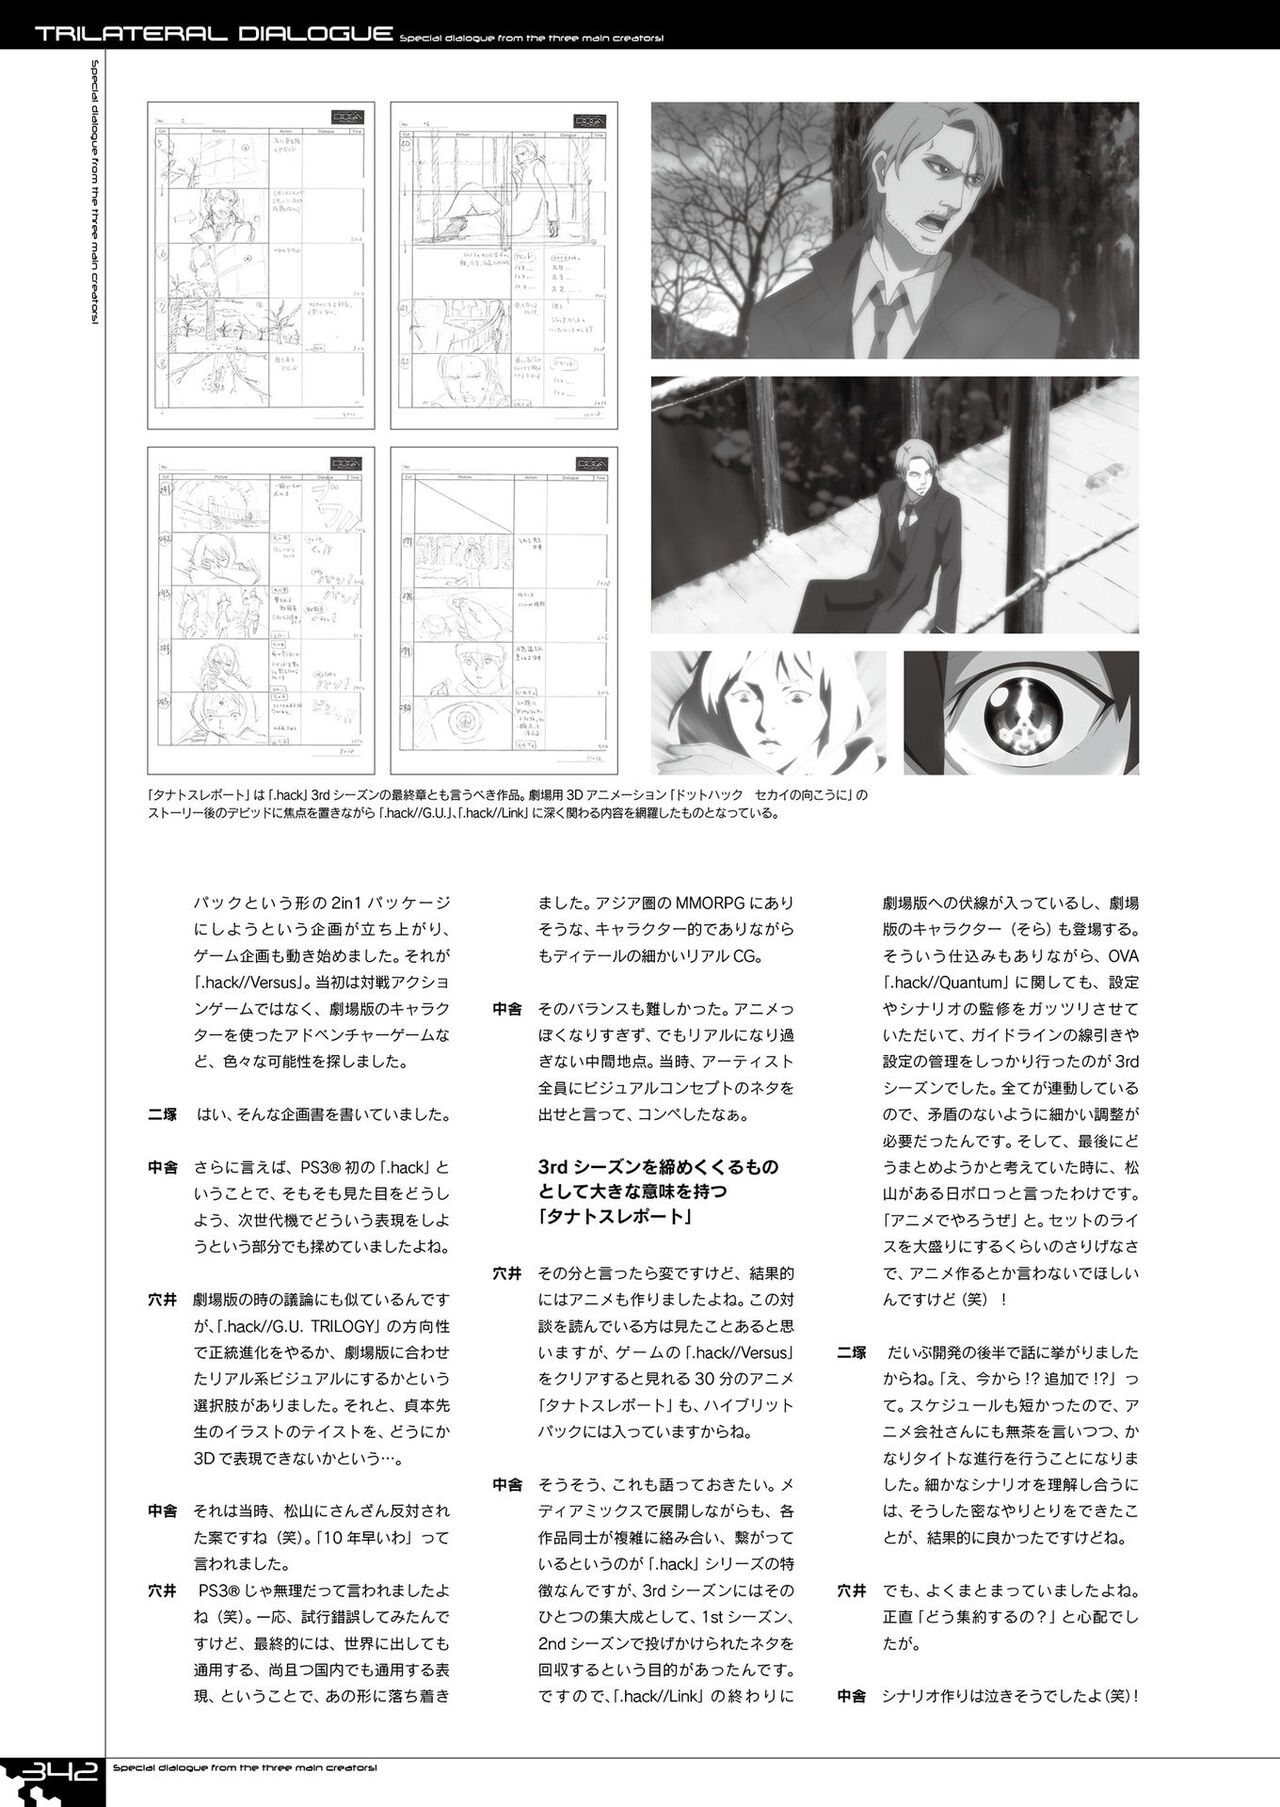 Dot Hack Sekai-no Muko ni  +Versus Complete Set  Documentation .hack //Archives _ 05 344